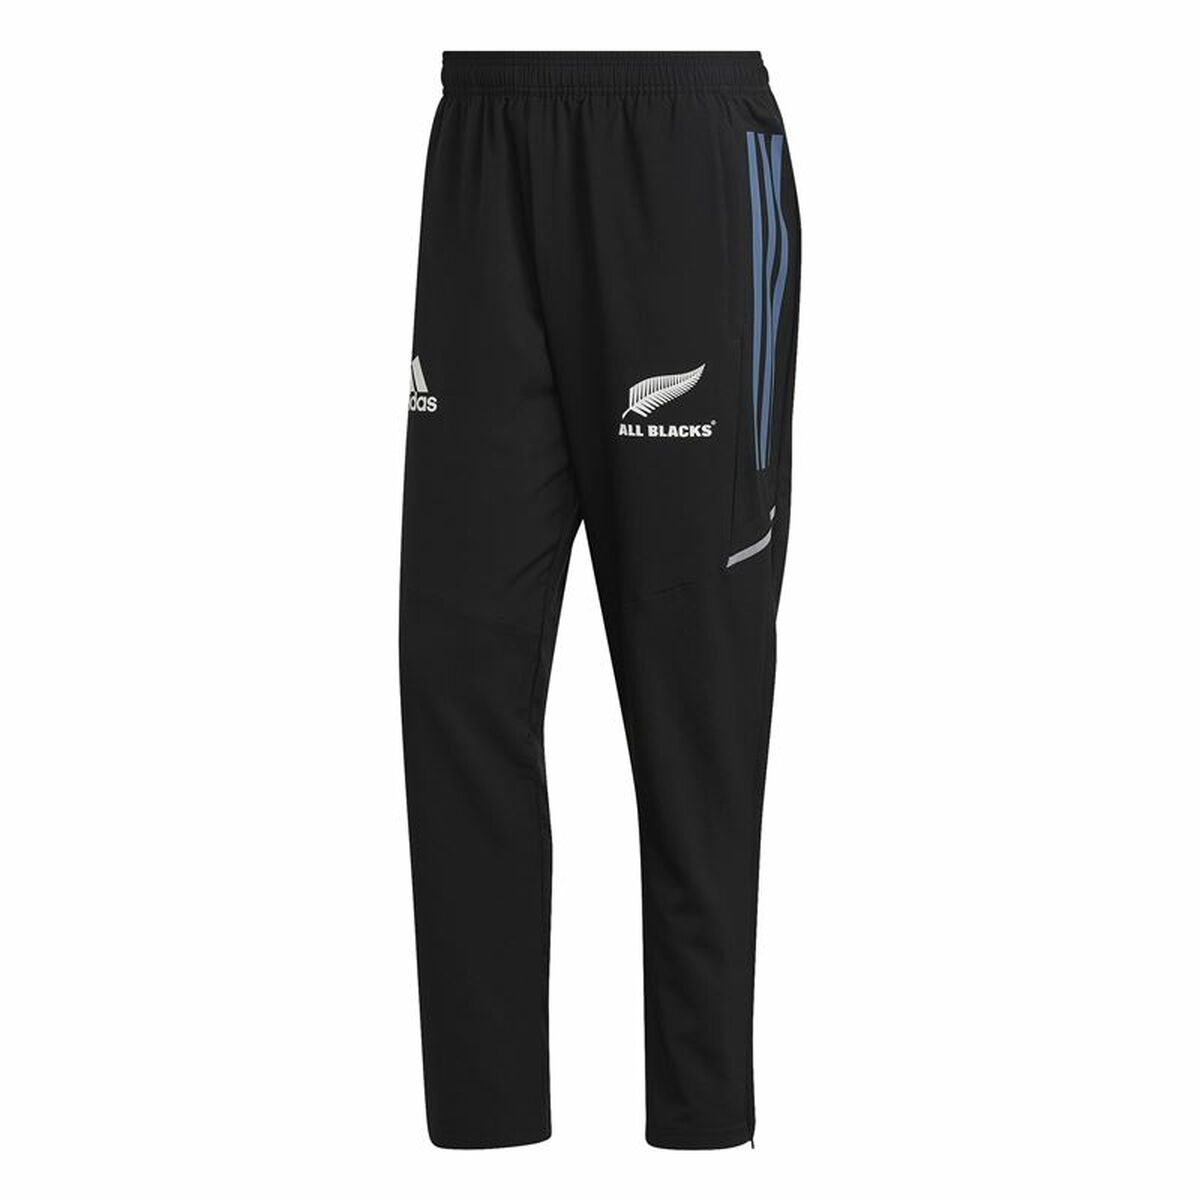 Pantaloni lungi de sport Adidas All Blacks Primeblue Negru Bărbați - Mărime S